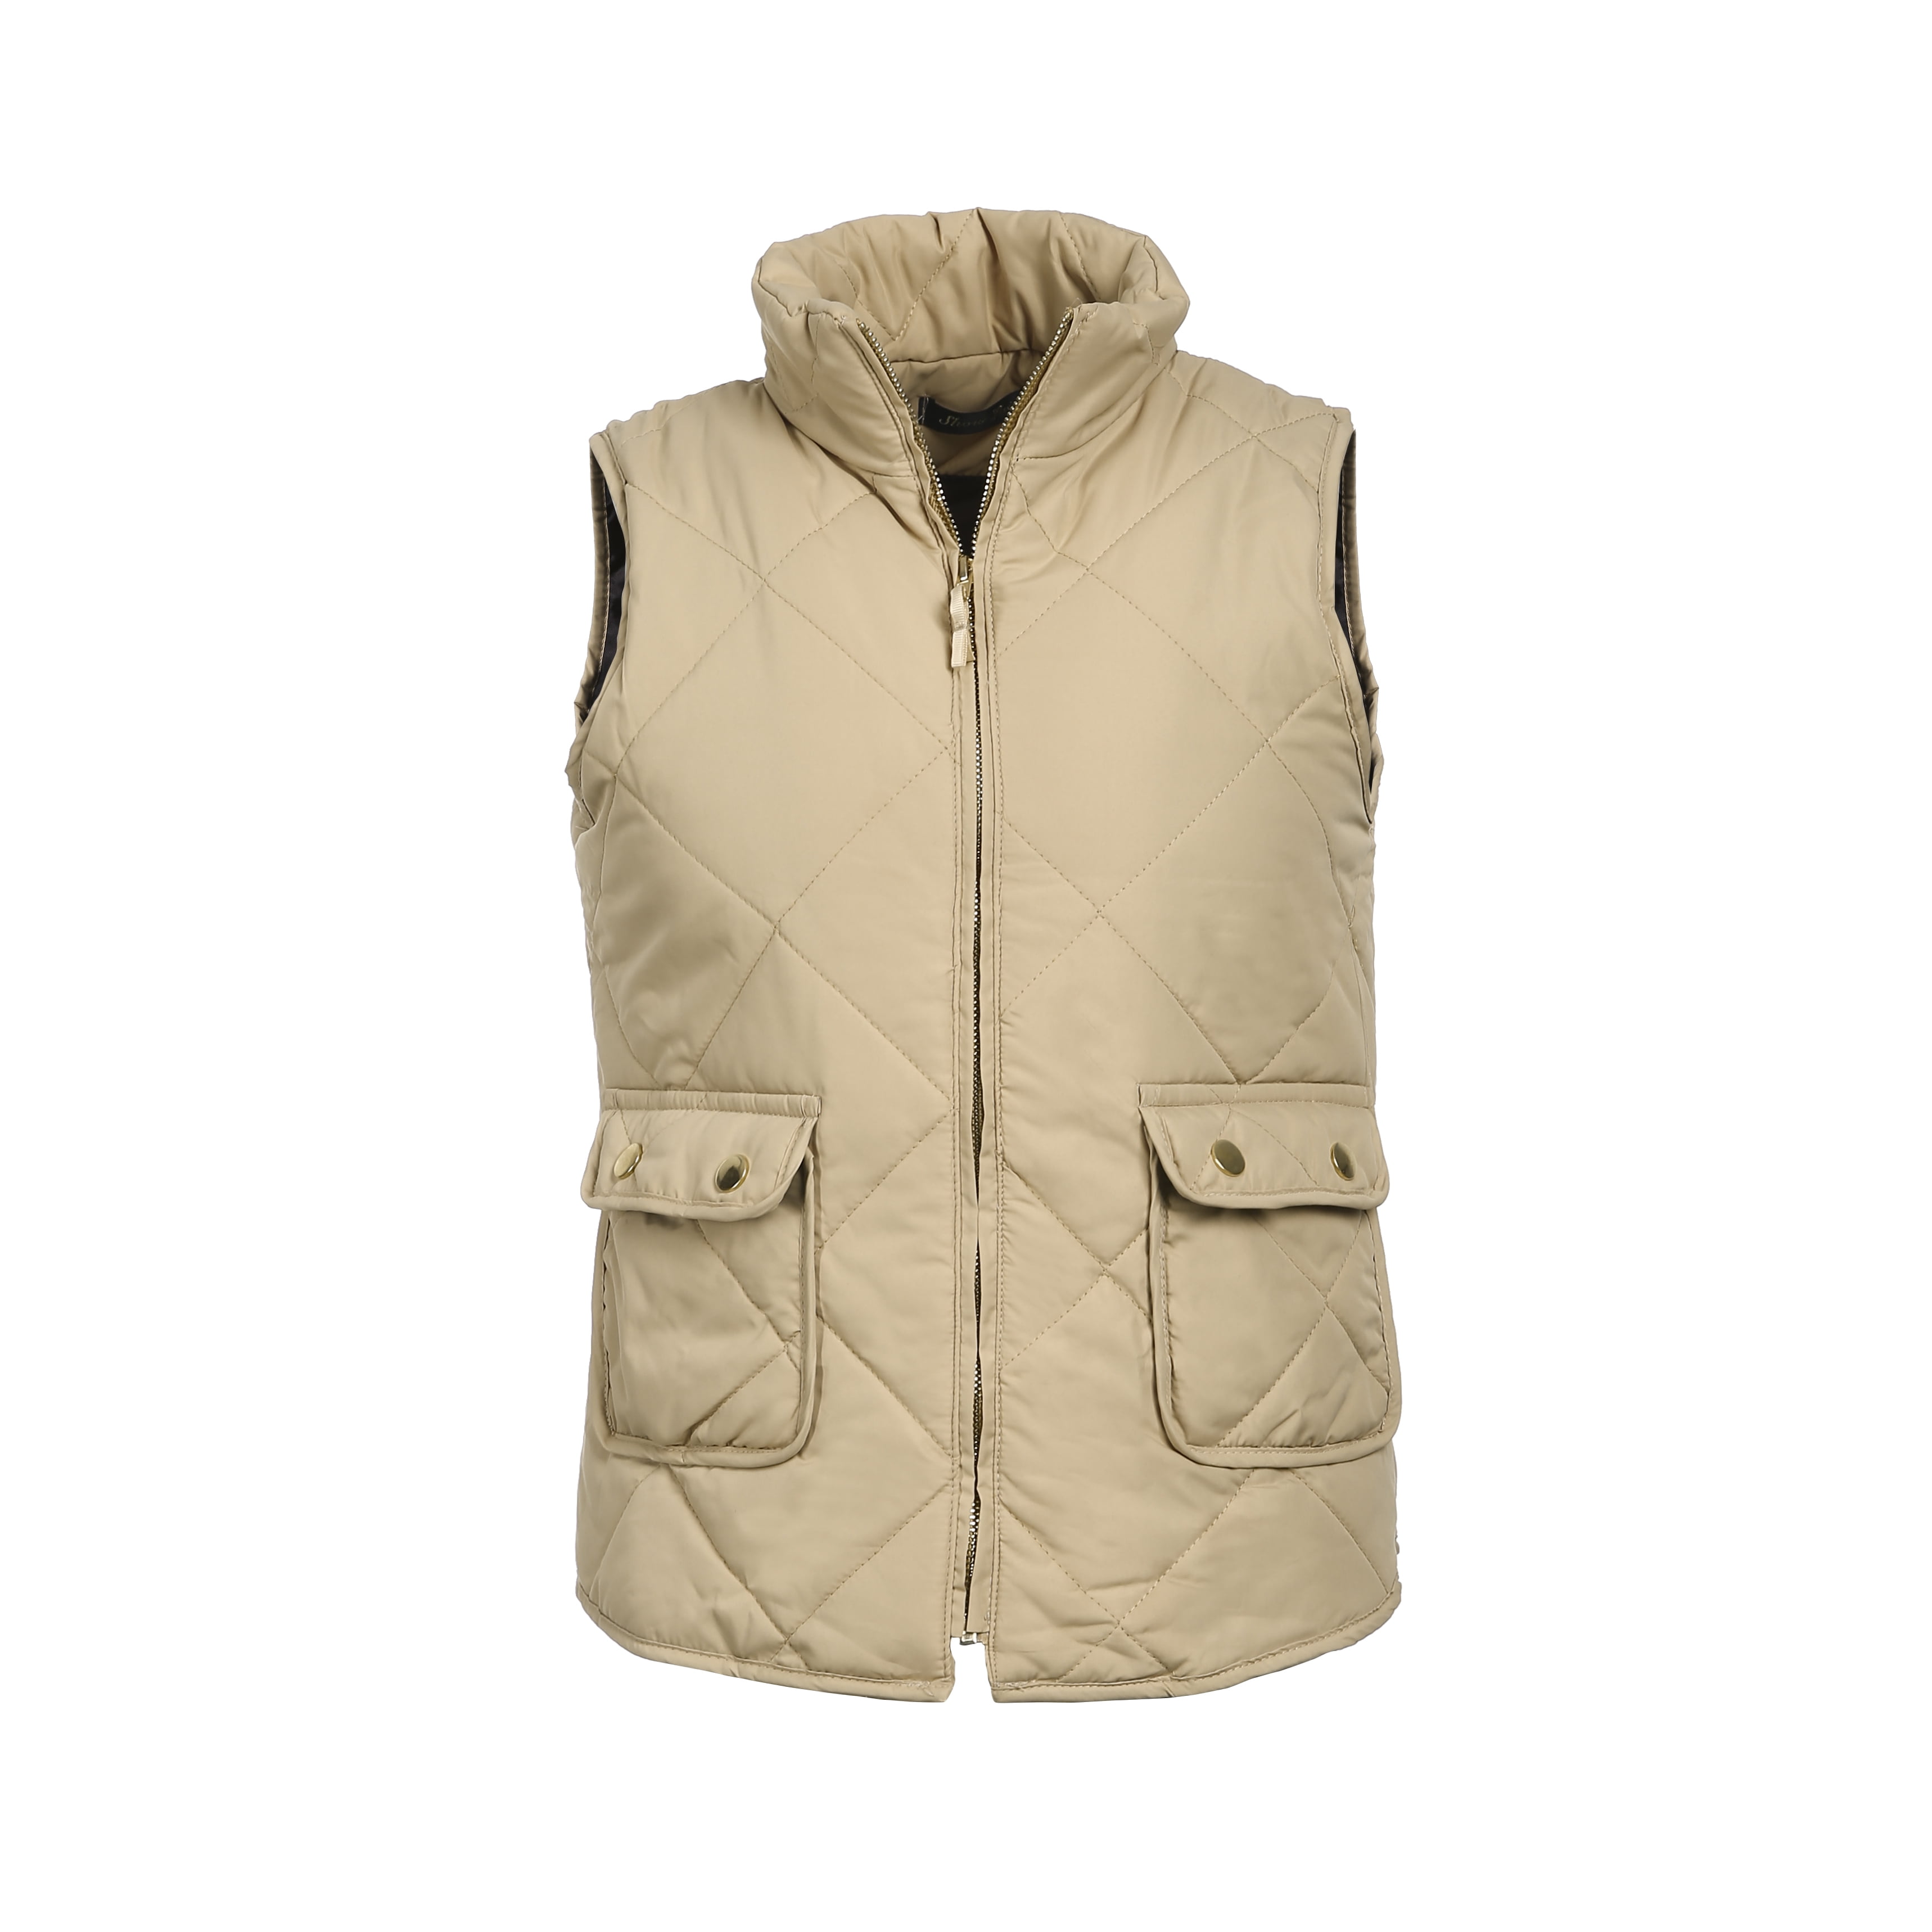 Women Solid Sleeveless Winter Jacke Thick Warm Waistcoat Vest Coat Jacket 2018 